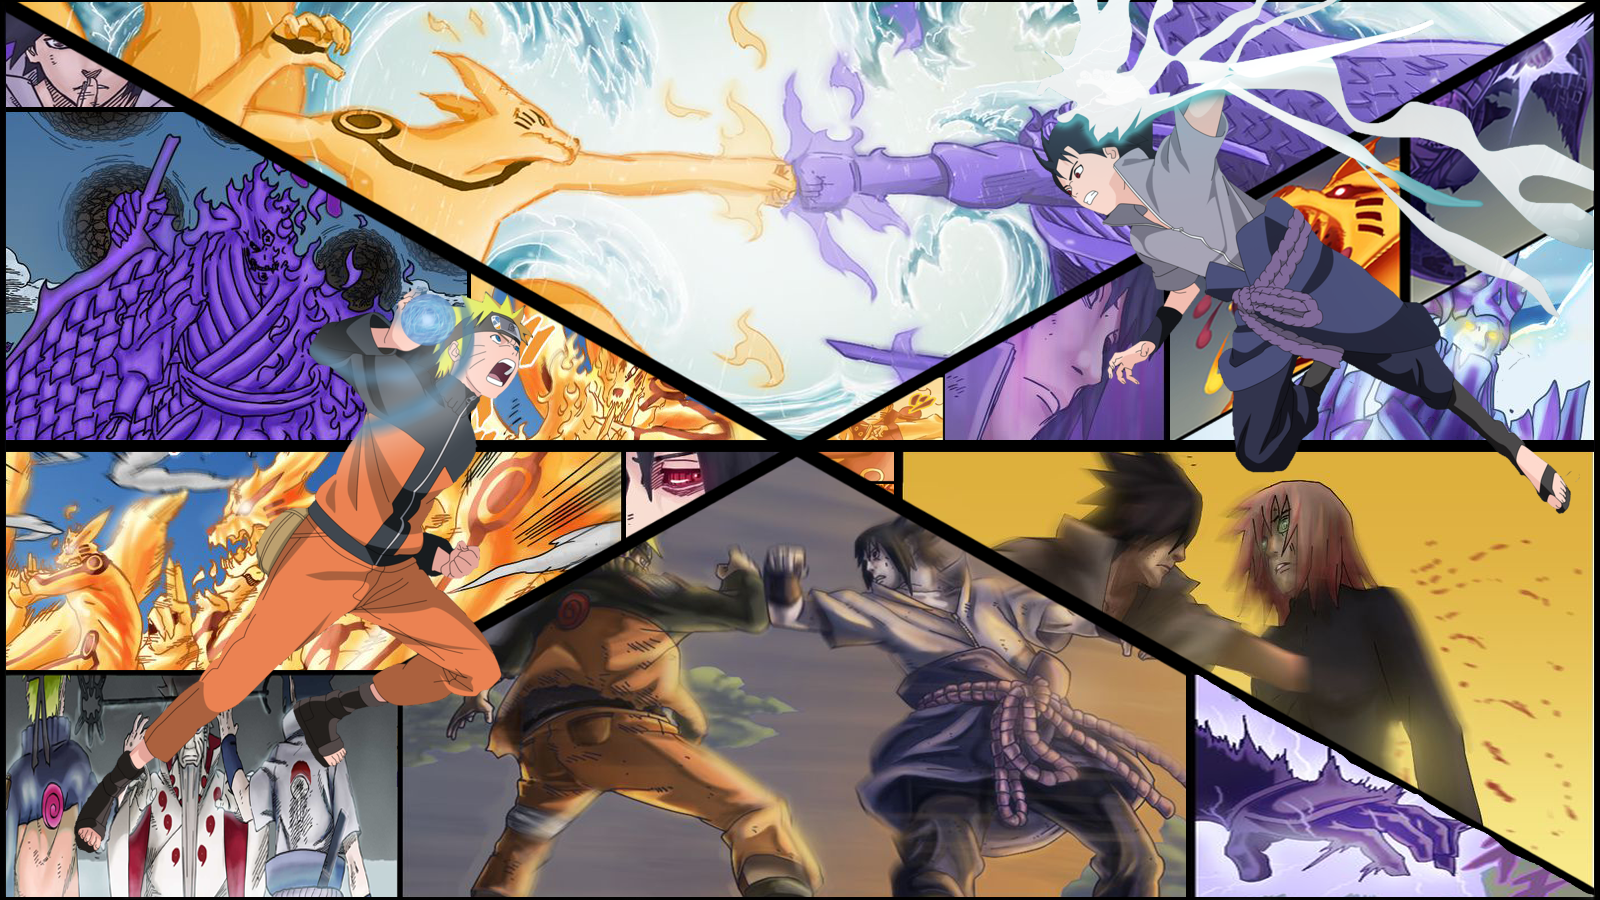 Naruto vs Sasuke Wallpaper